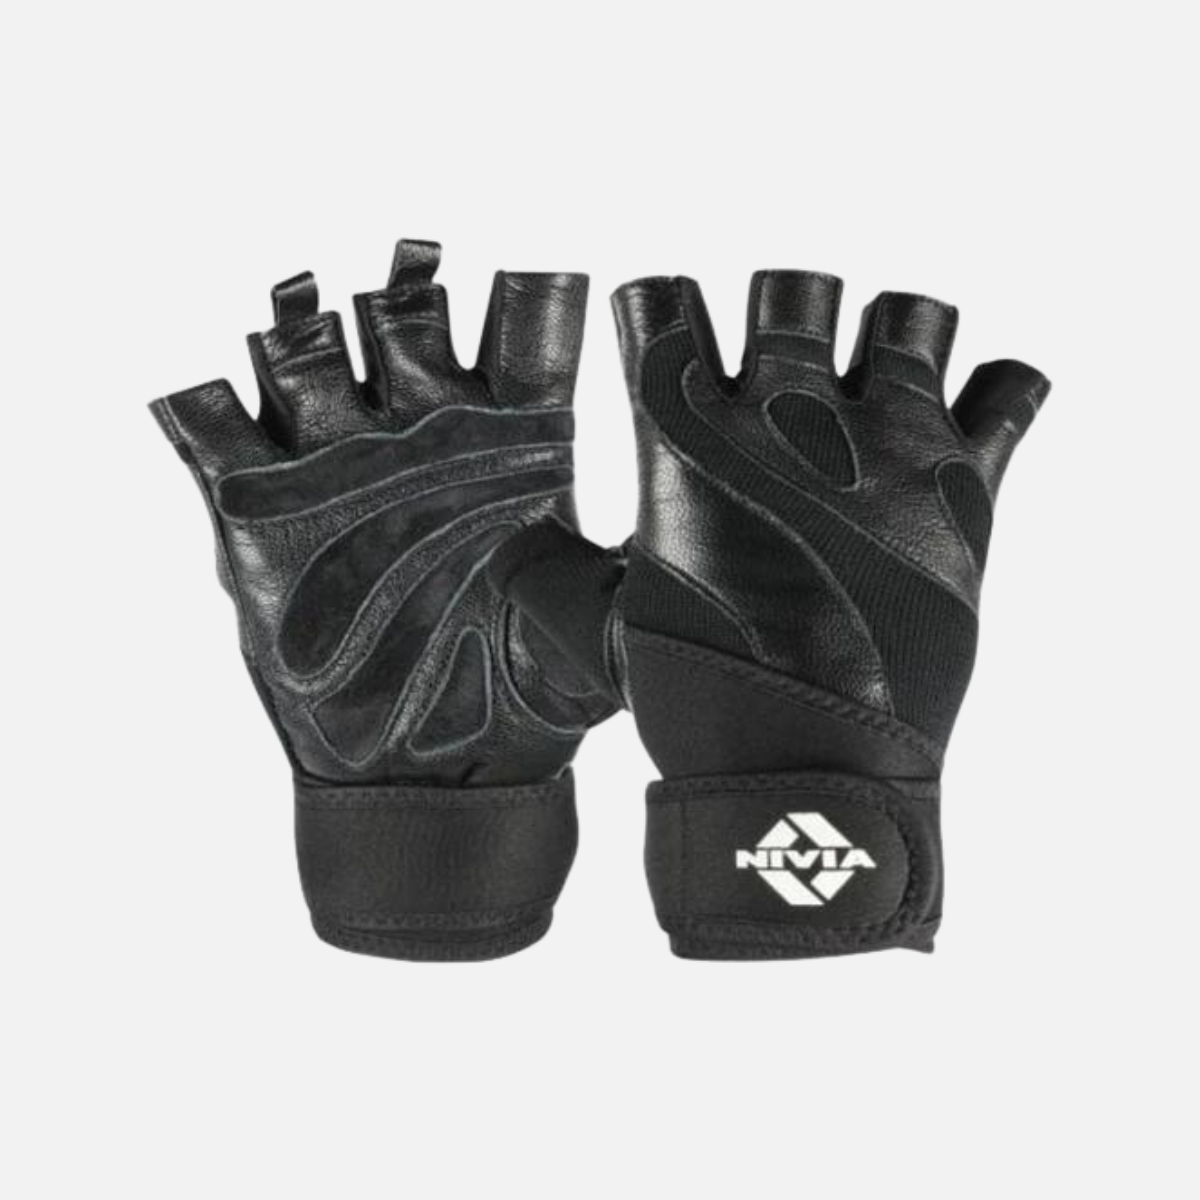 Nivia Tough Grip Weightliftng Gym Gloves -Black